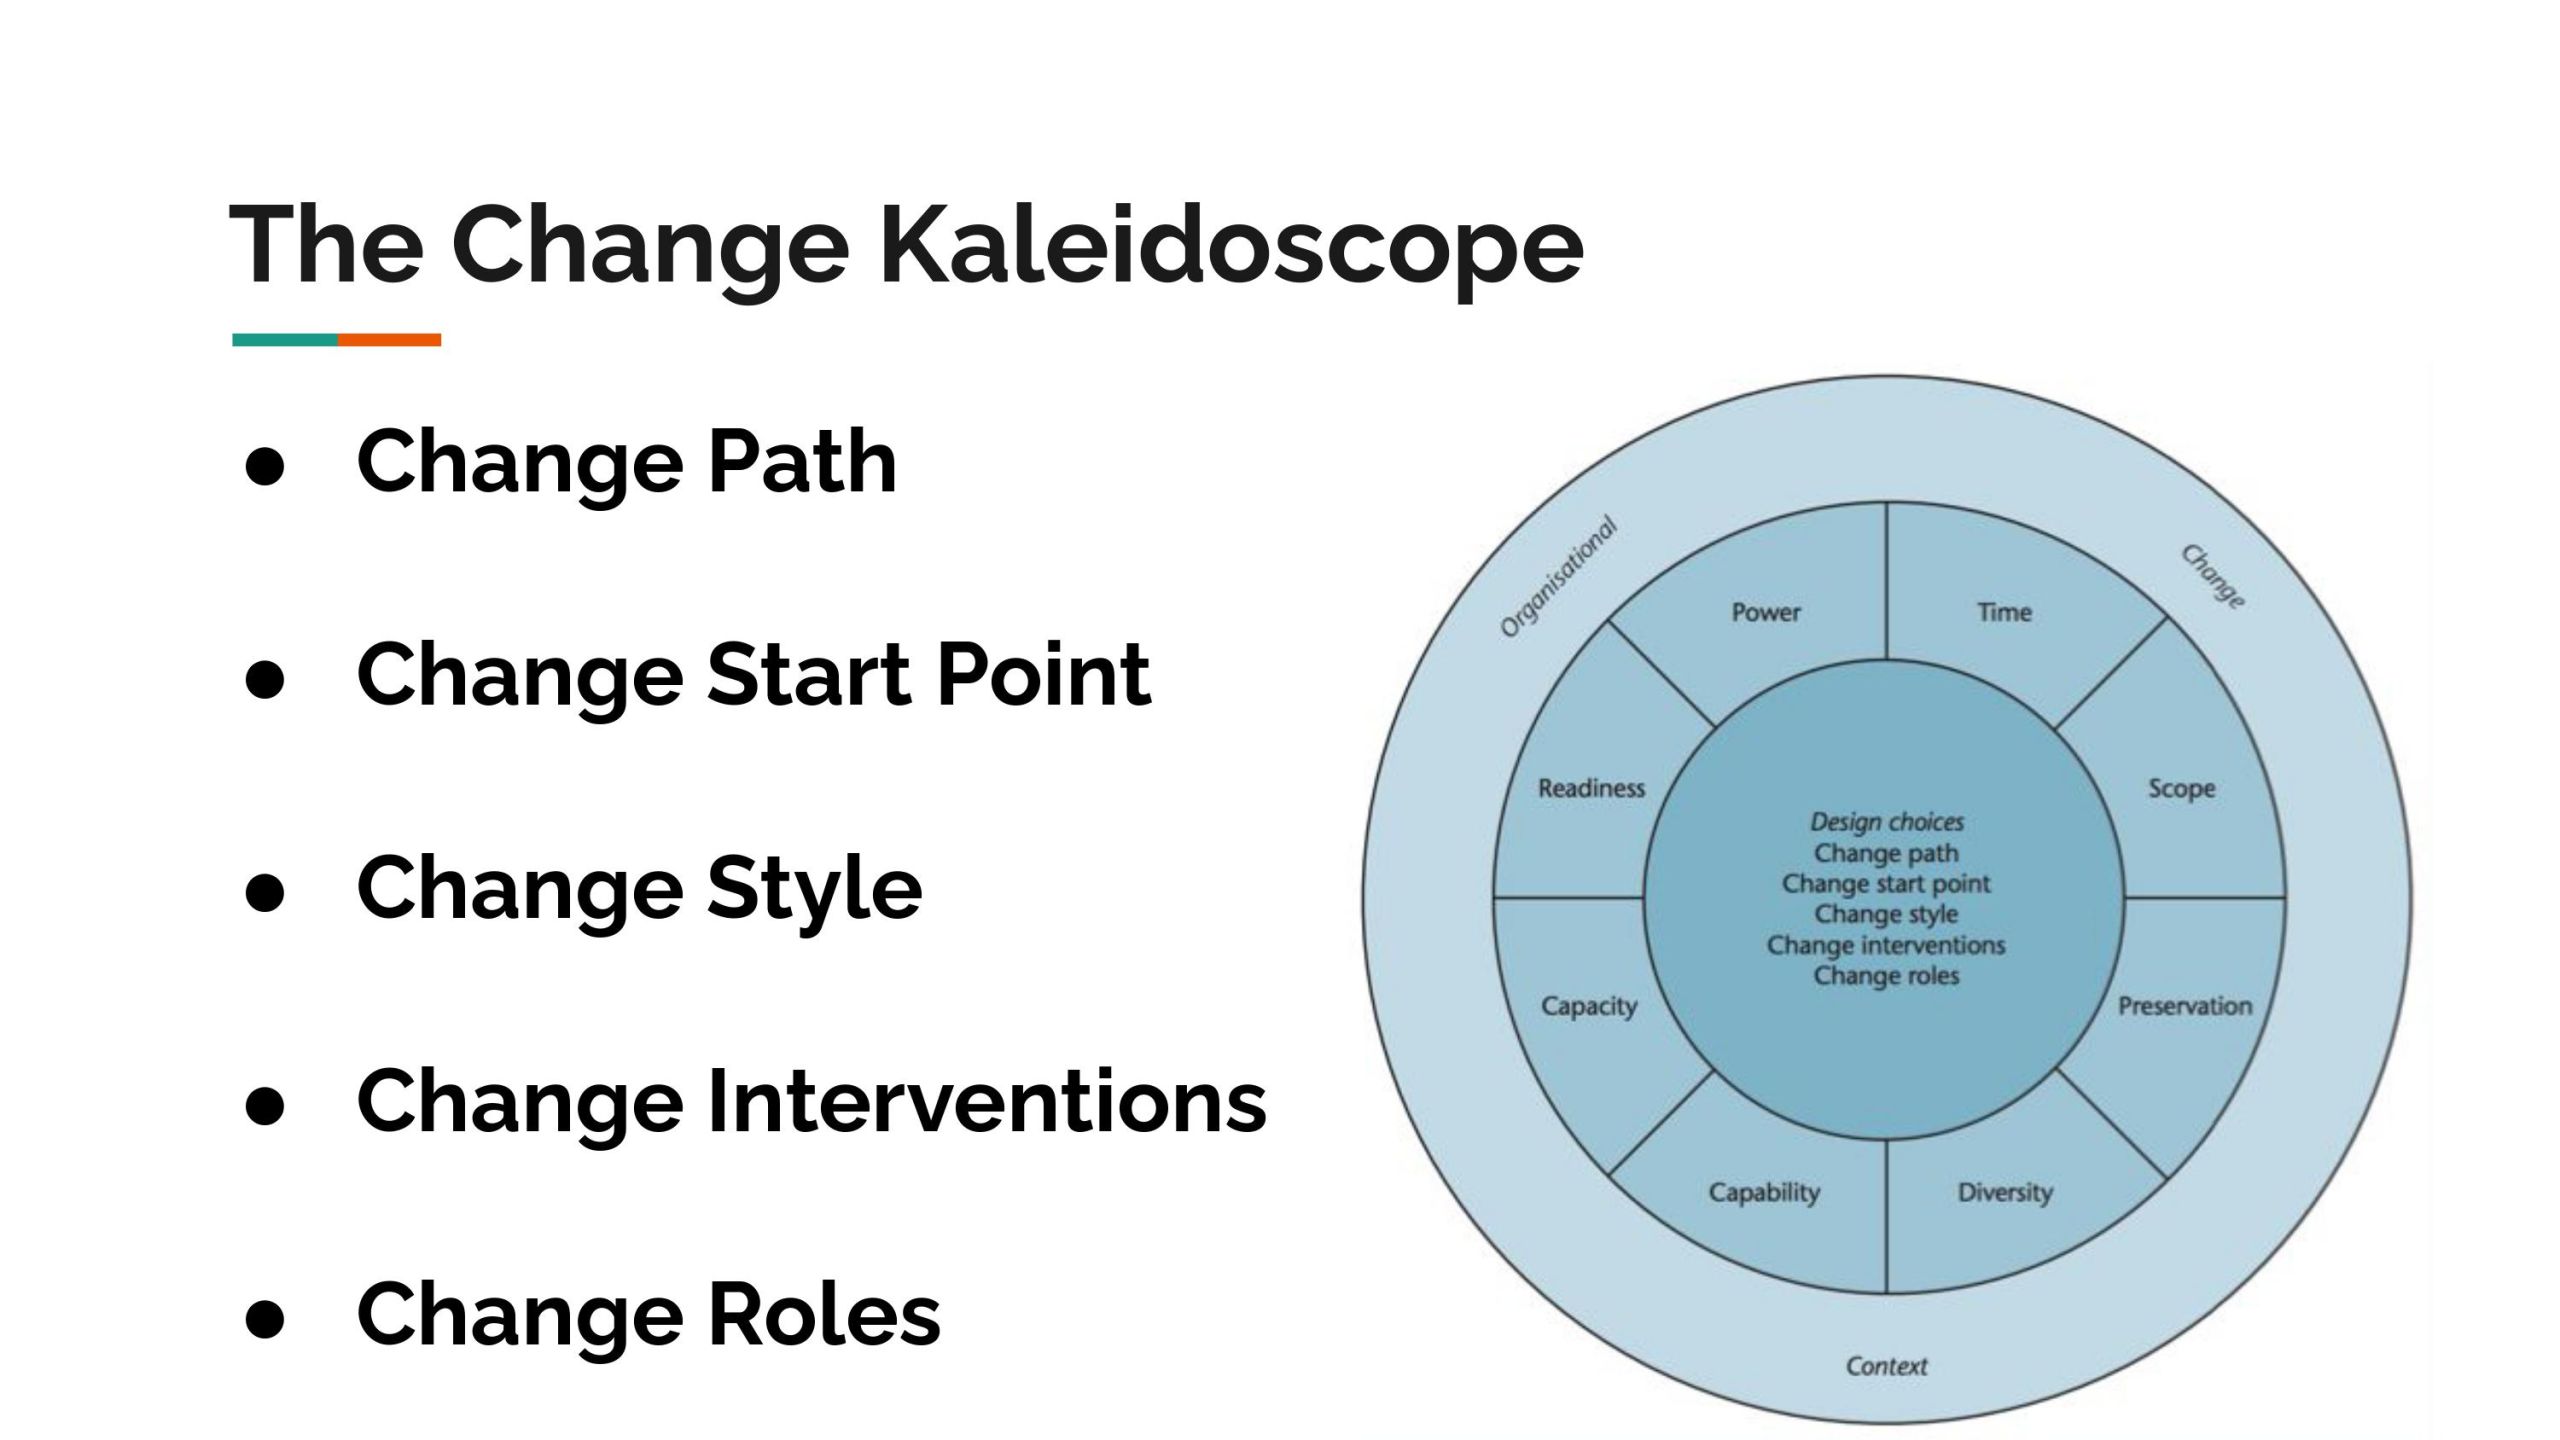 change kaleidoscope - Balogun and Hailey. Managing organizational change